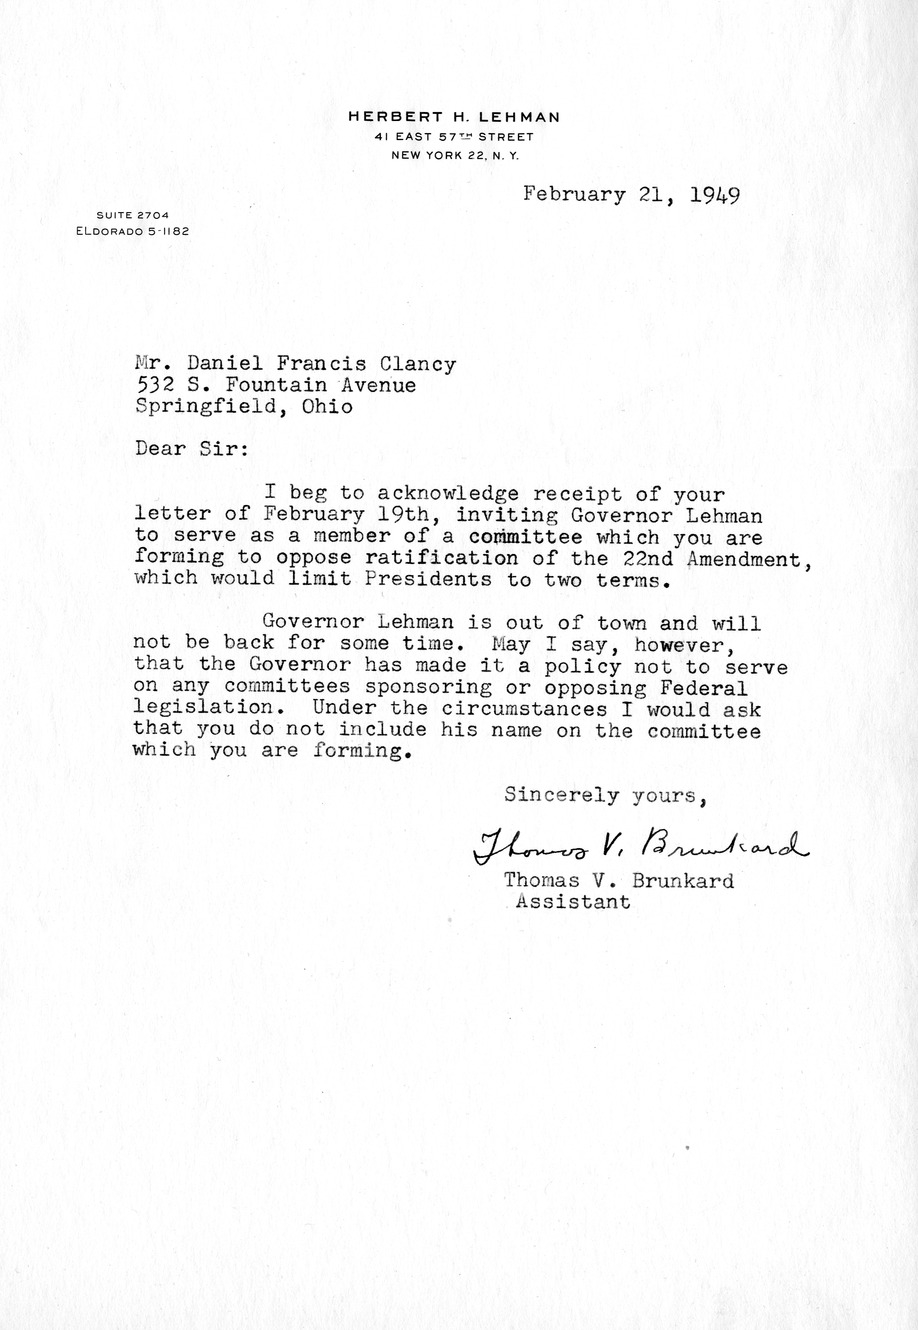 Letter from Thomas V. Brunkard to Daniel F. Clancy